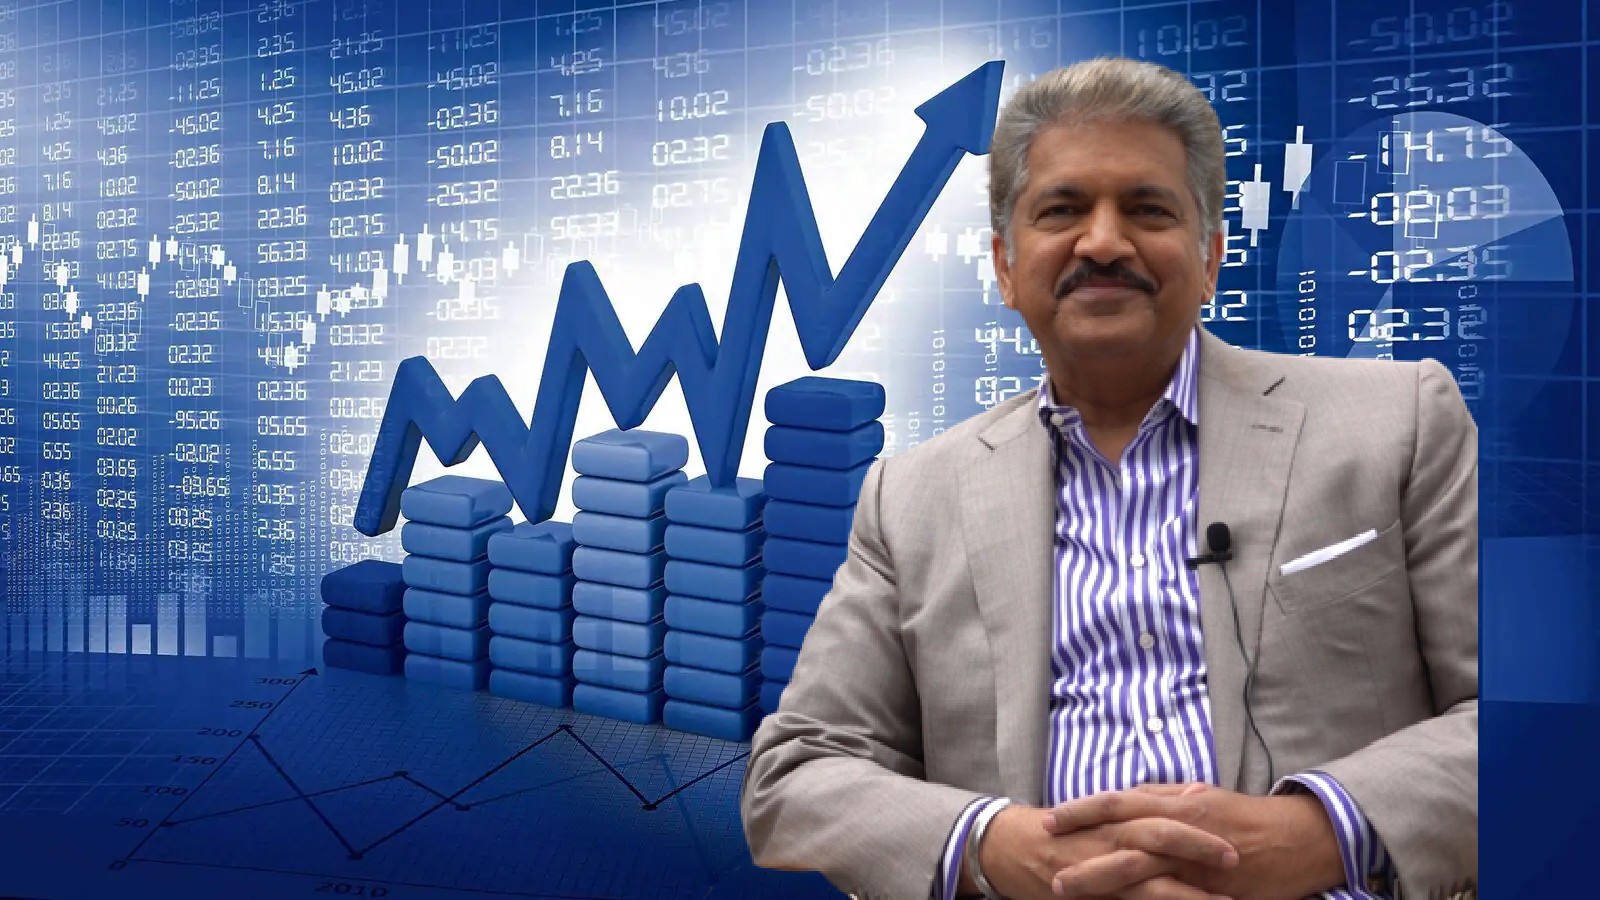 Mahindra and Mahindra finance share 2023